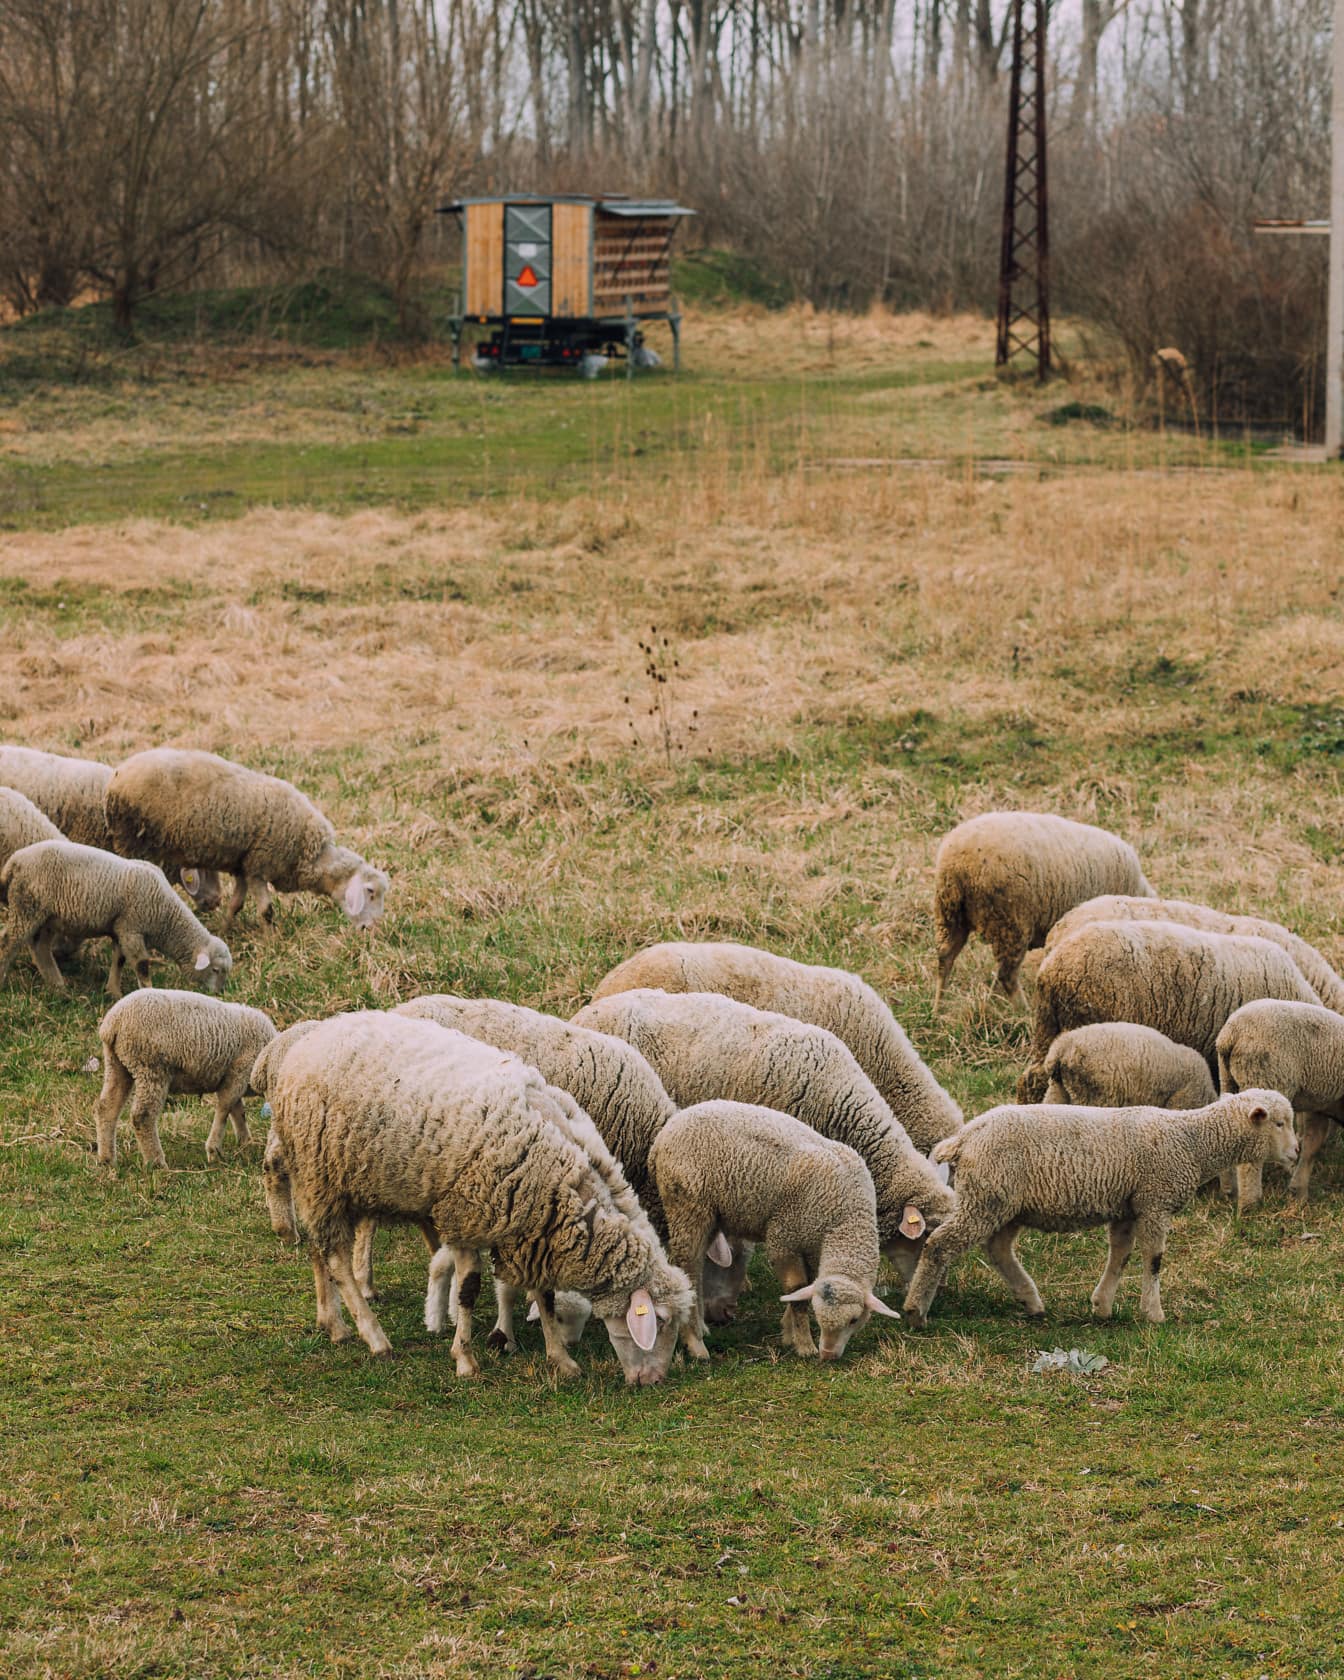 Sheep grazing on grassy meadow in summer season